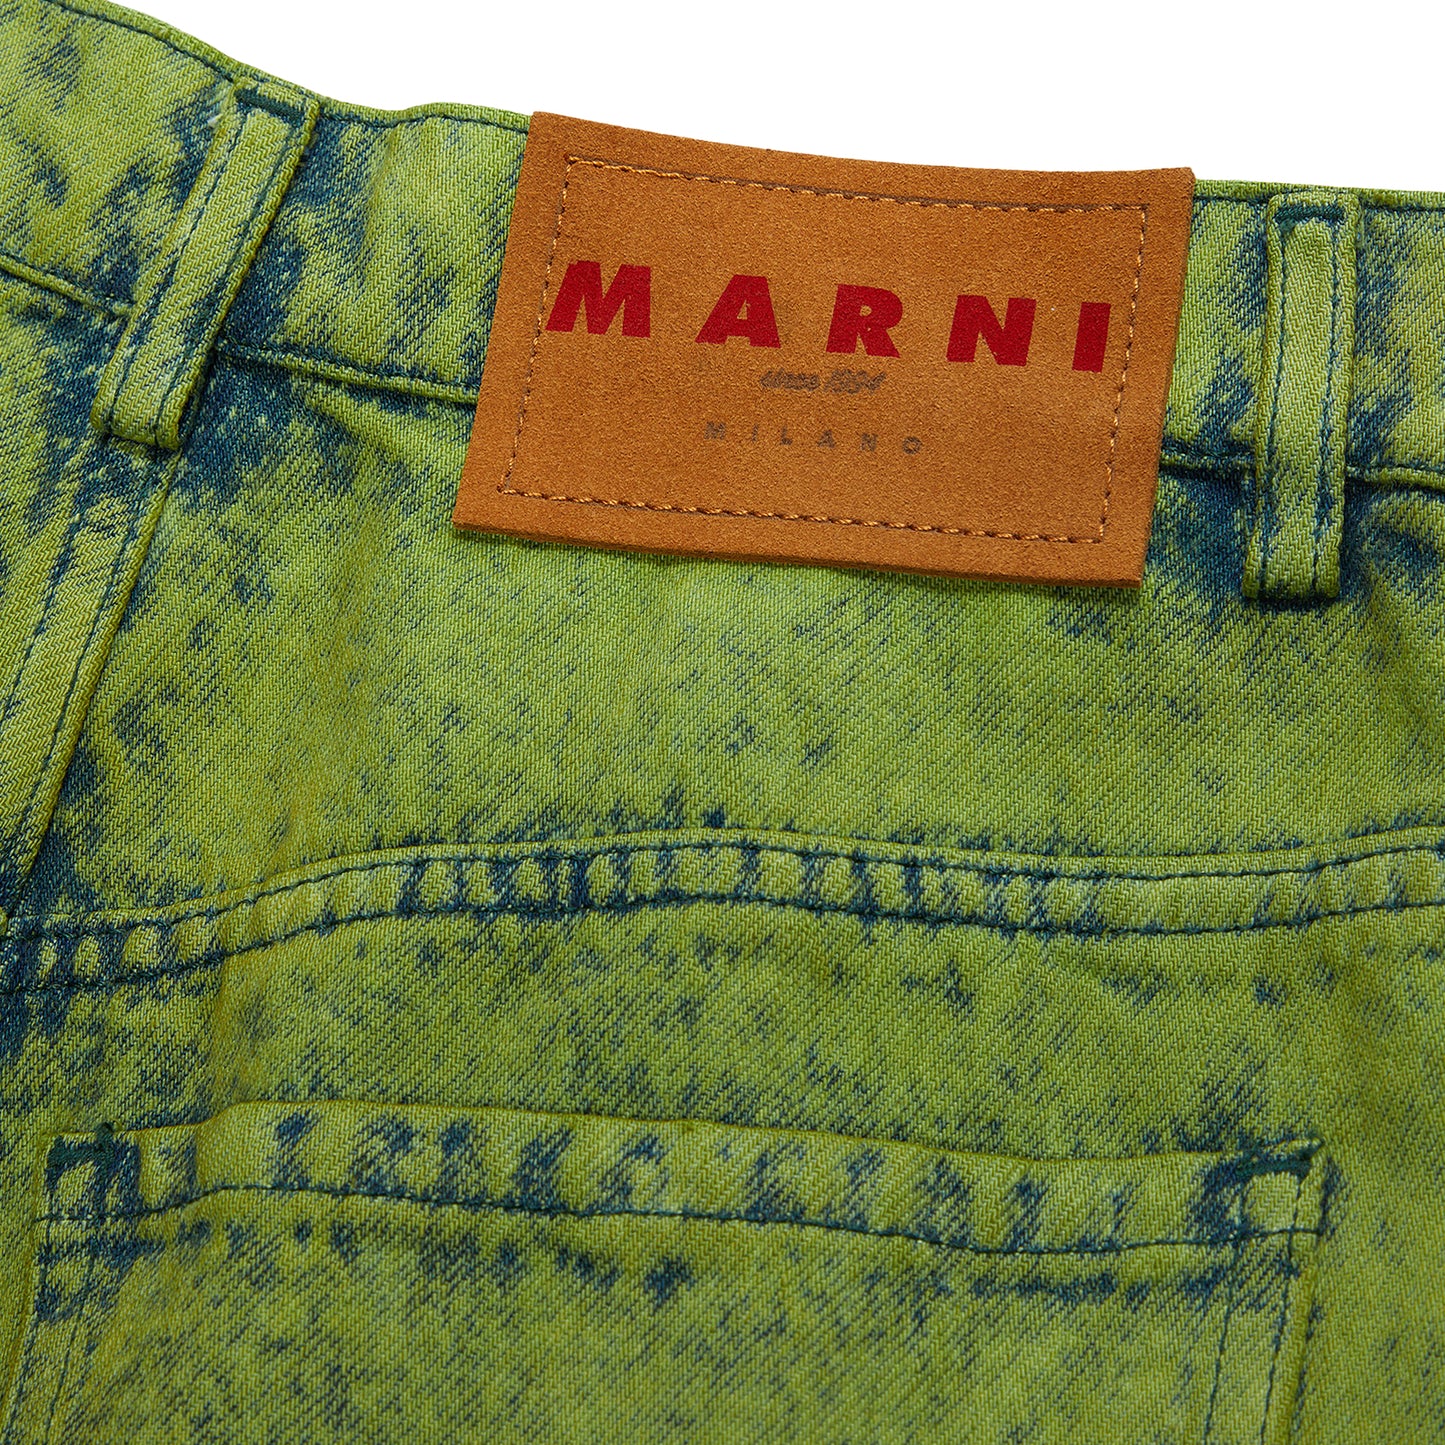 Marni Womens Trousers (Kiwi)